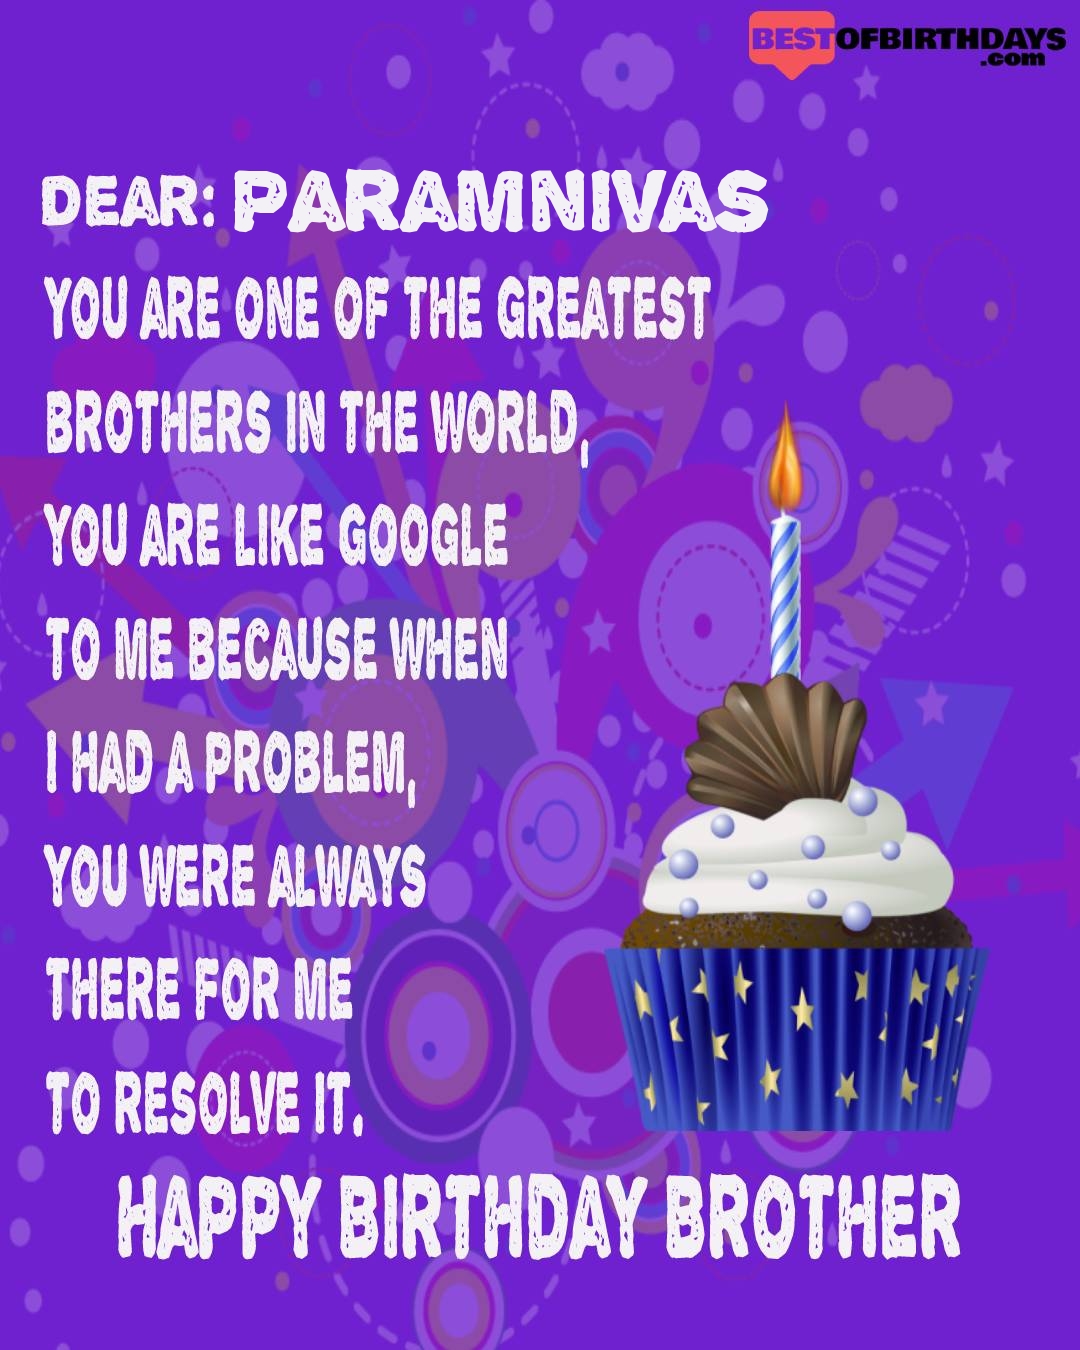 Happy birthday paramnivas bhai brother bro